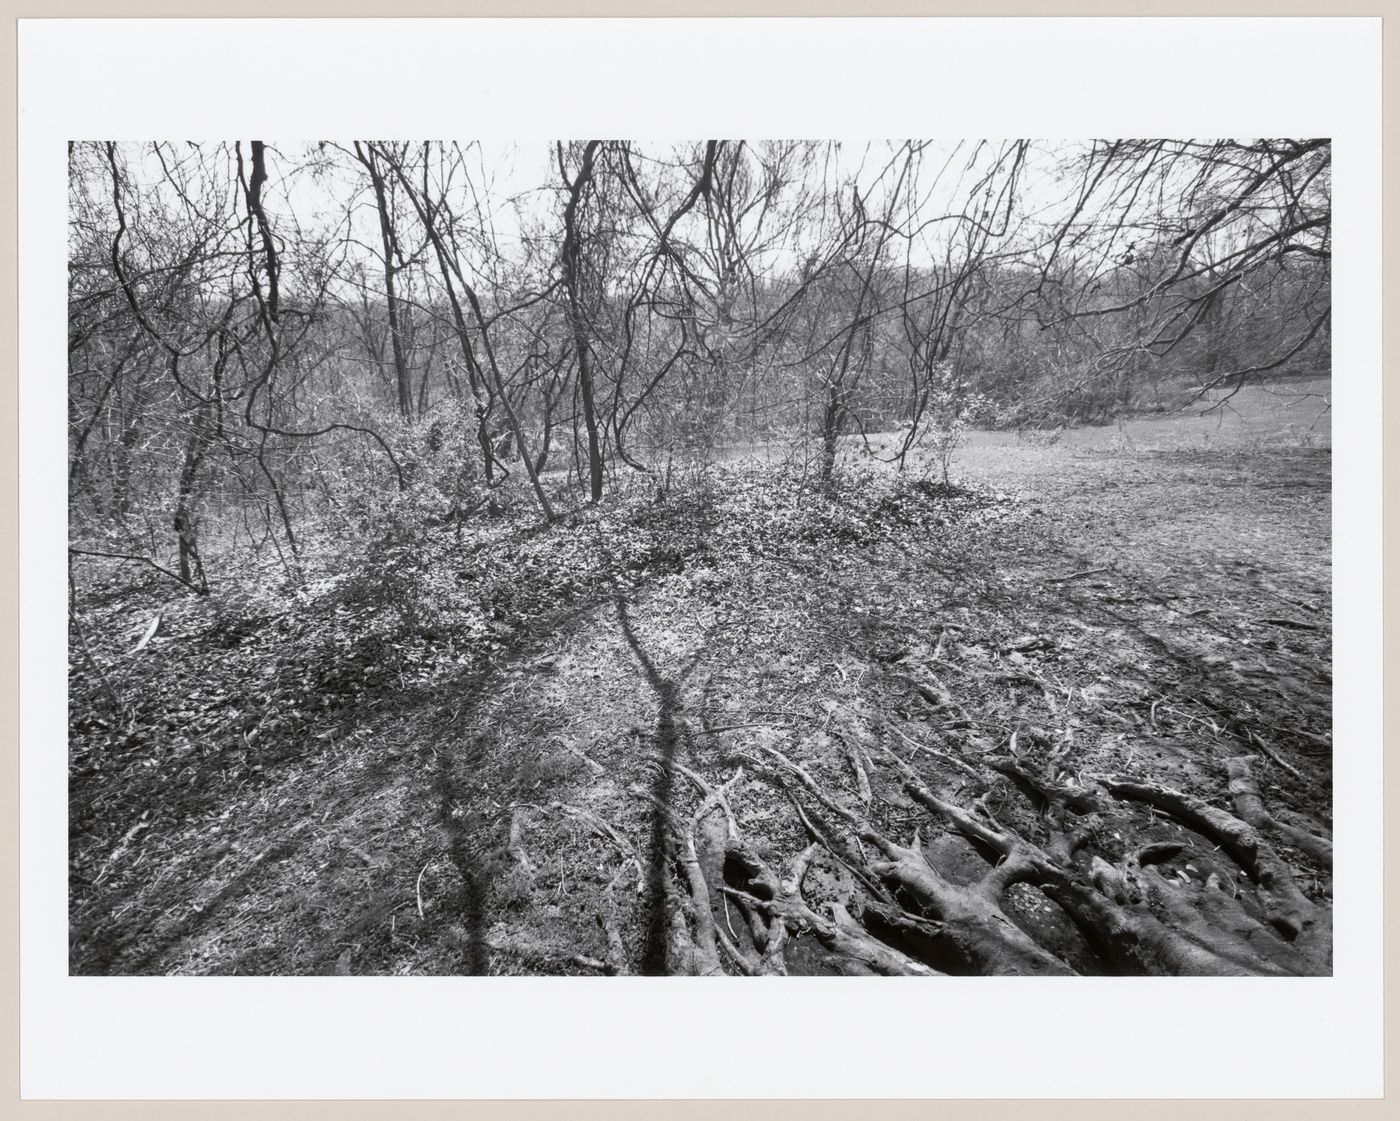 Roots of European beech tree, Cherokee Park, Louisville, Kentucky